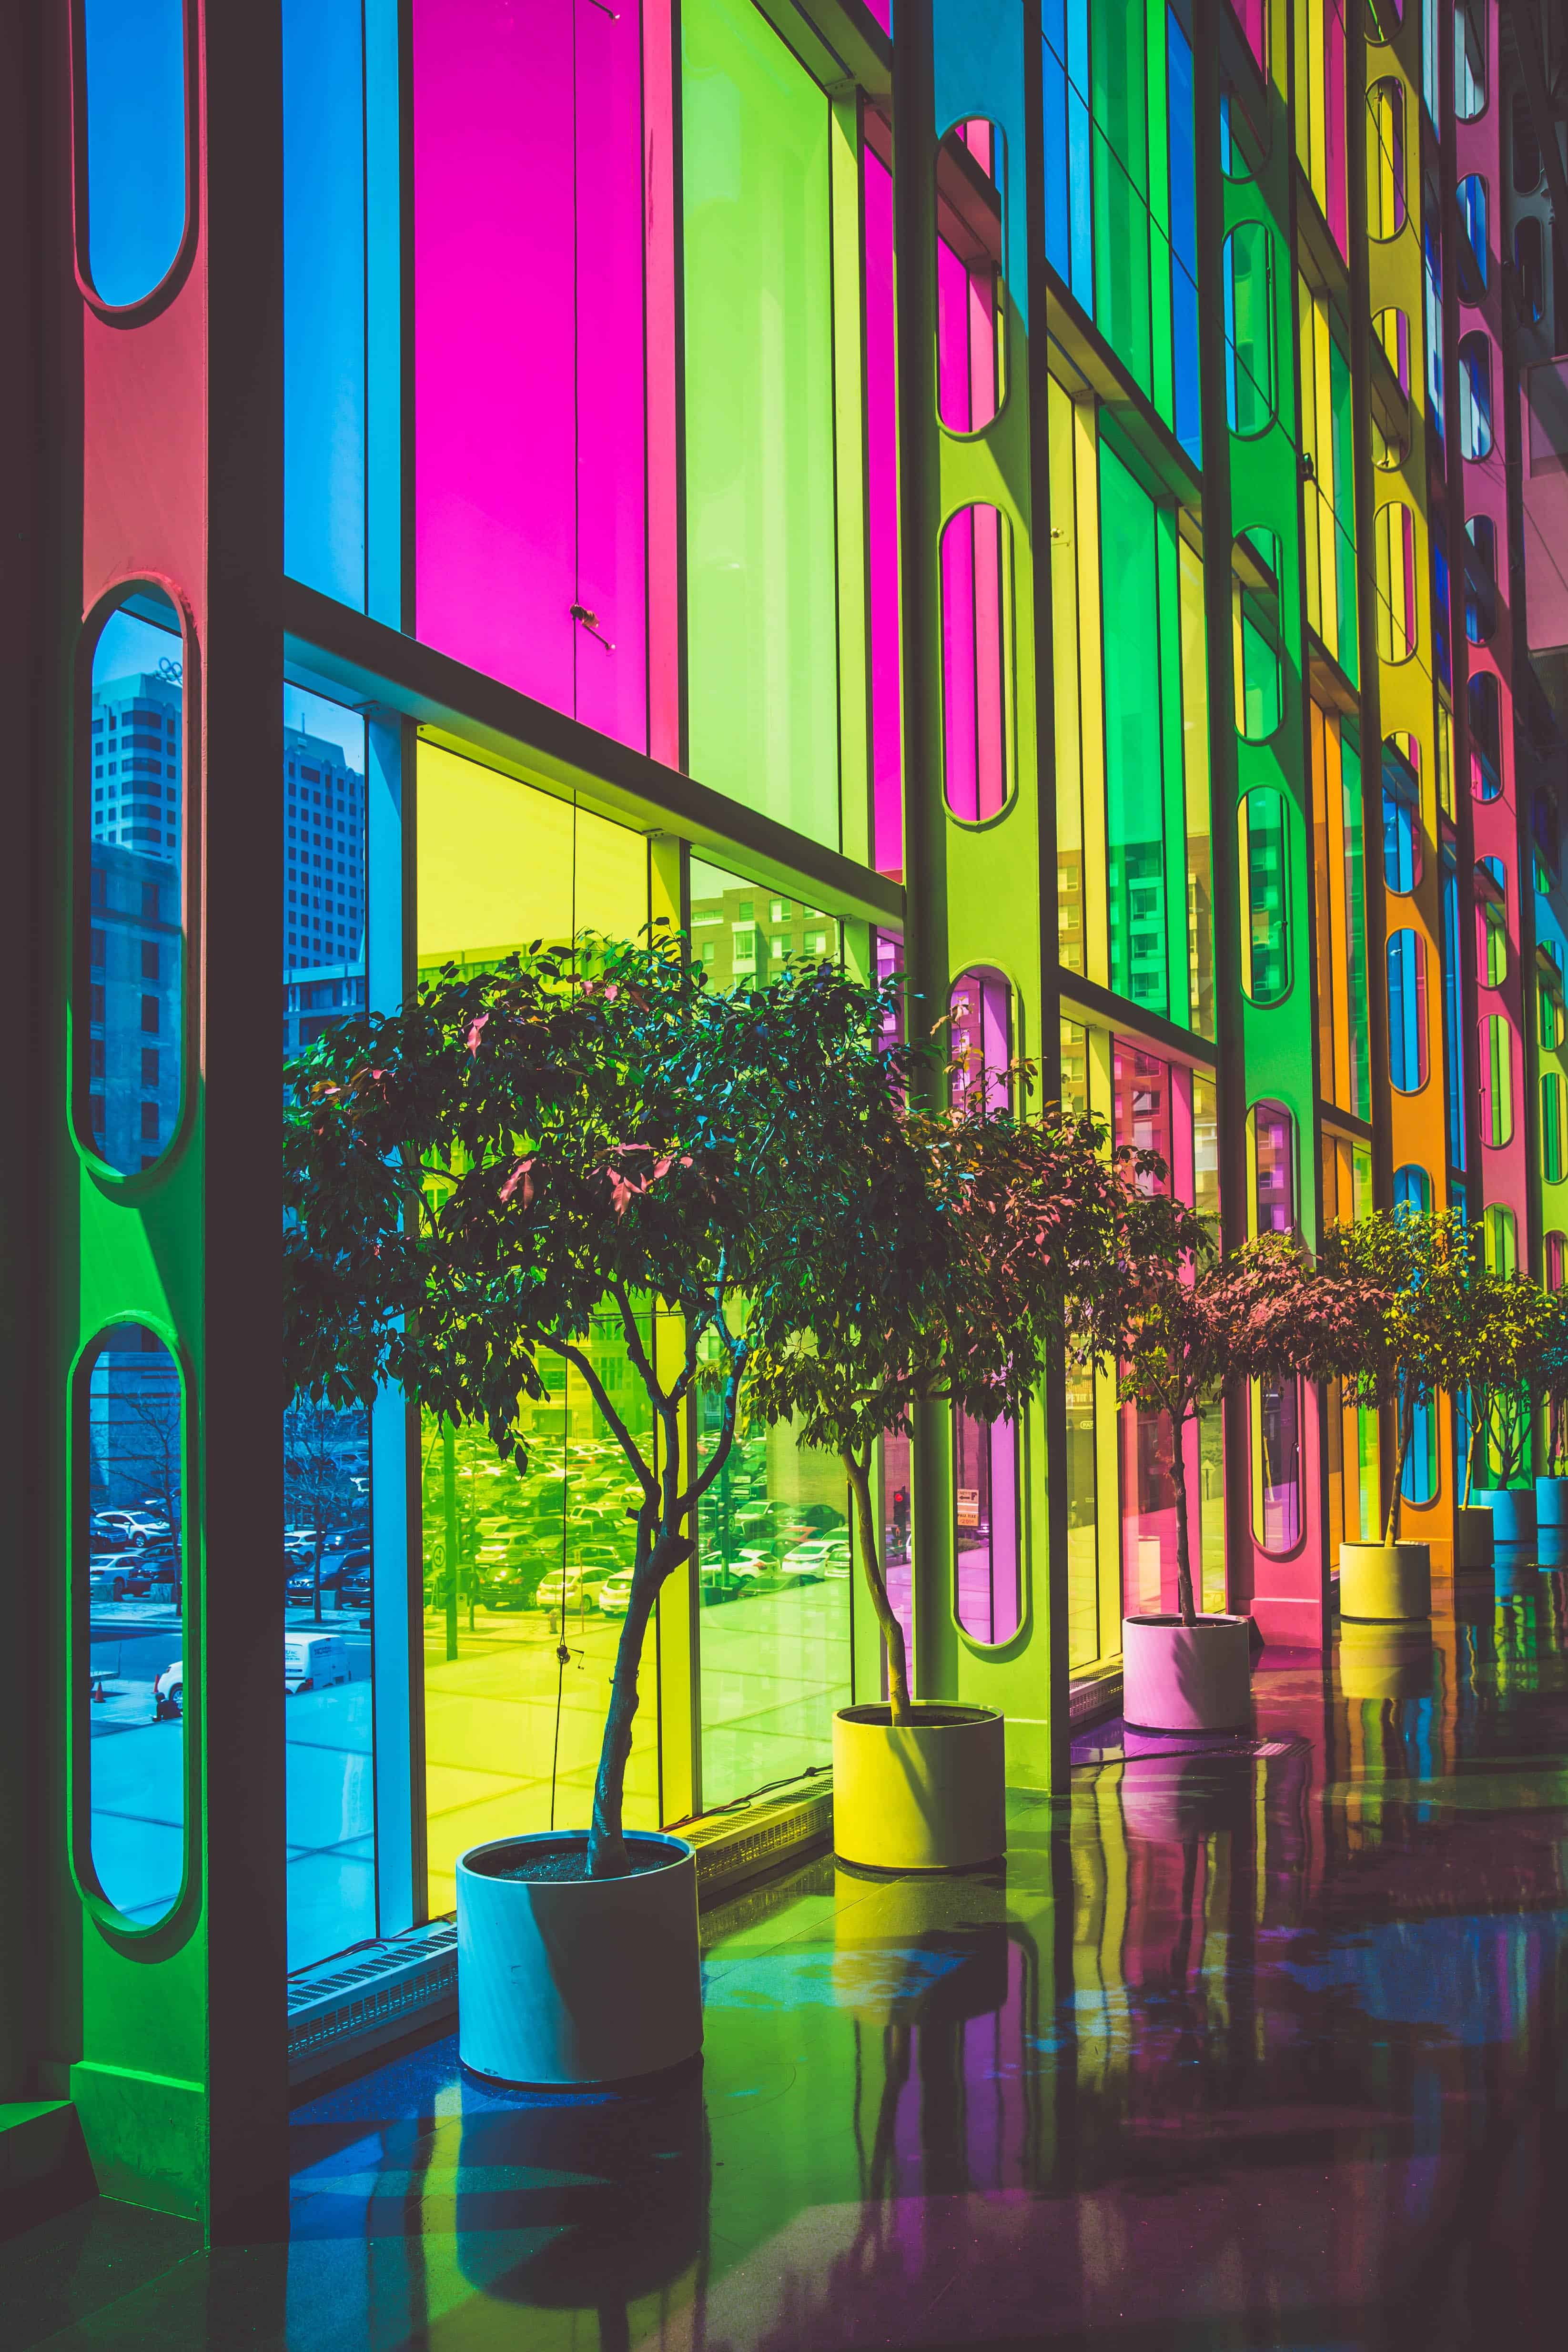 colorful windows image